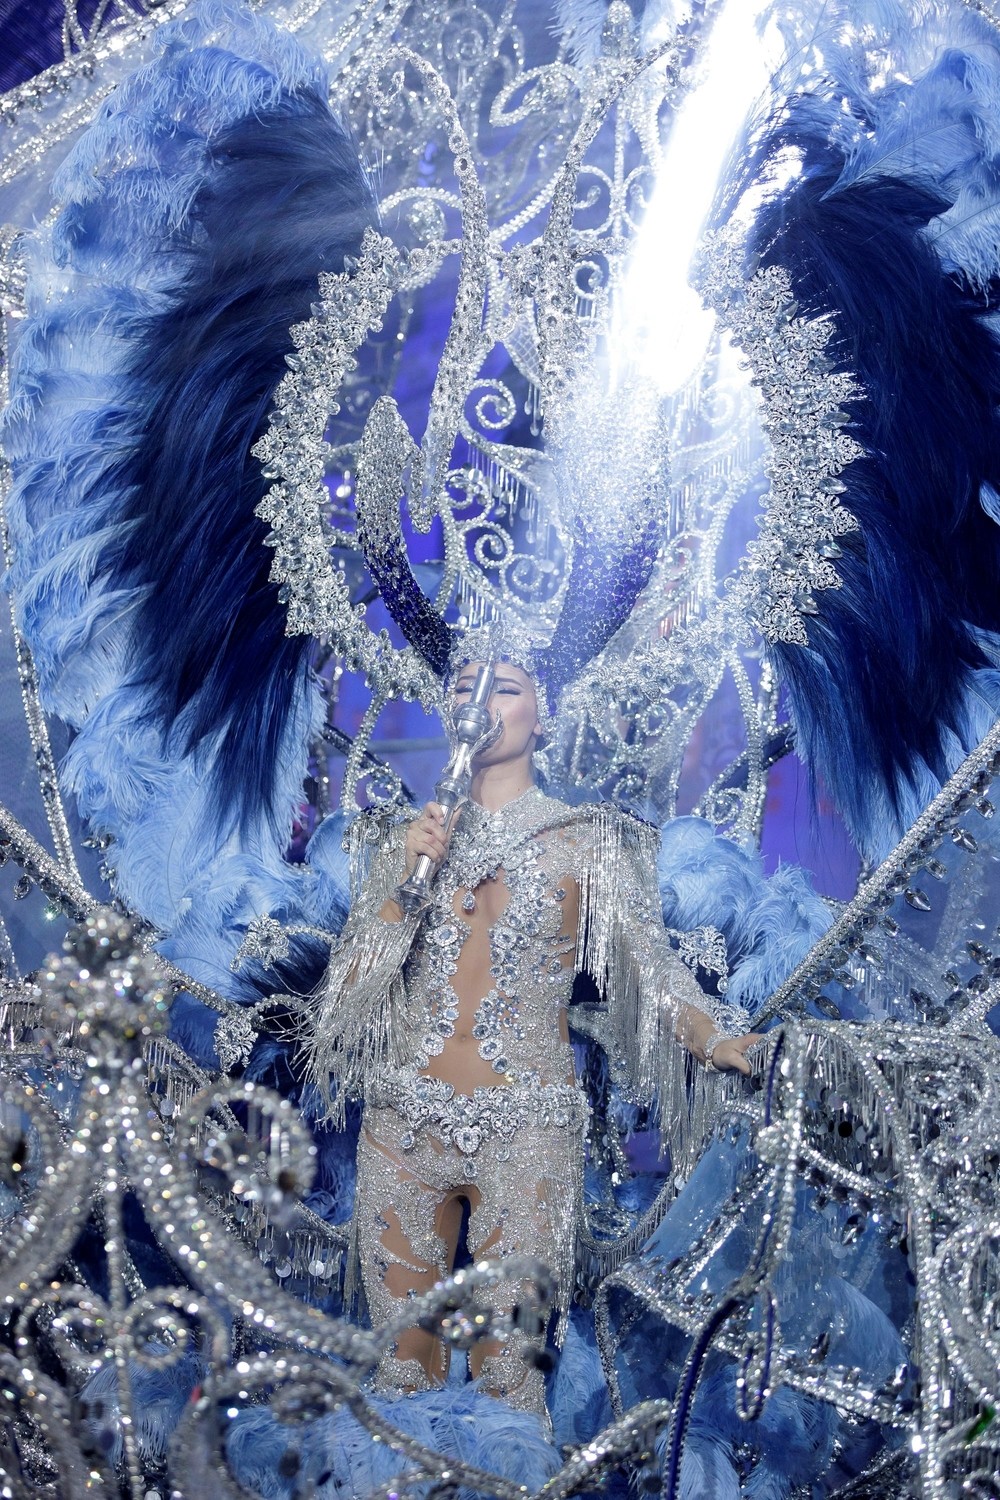 Tenerife ya tiene a su reina del Carnaval